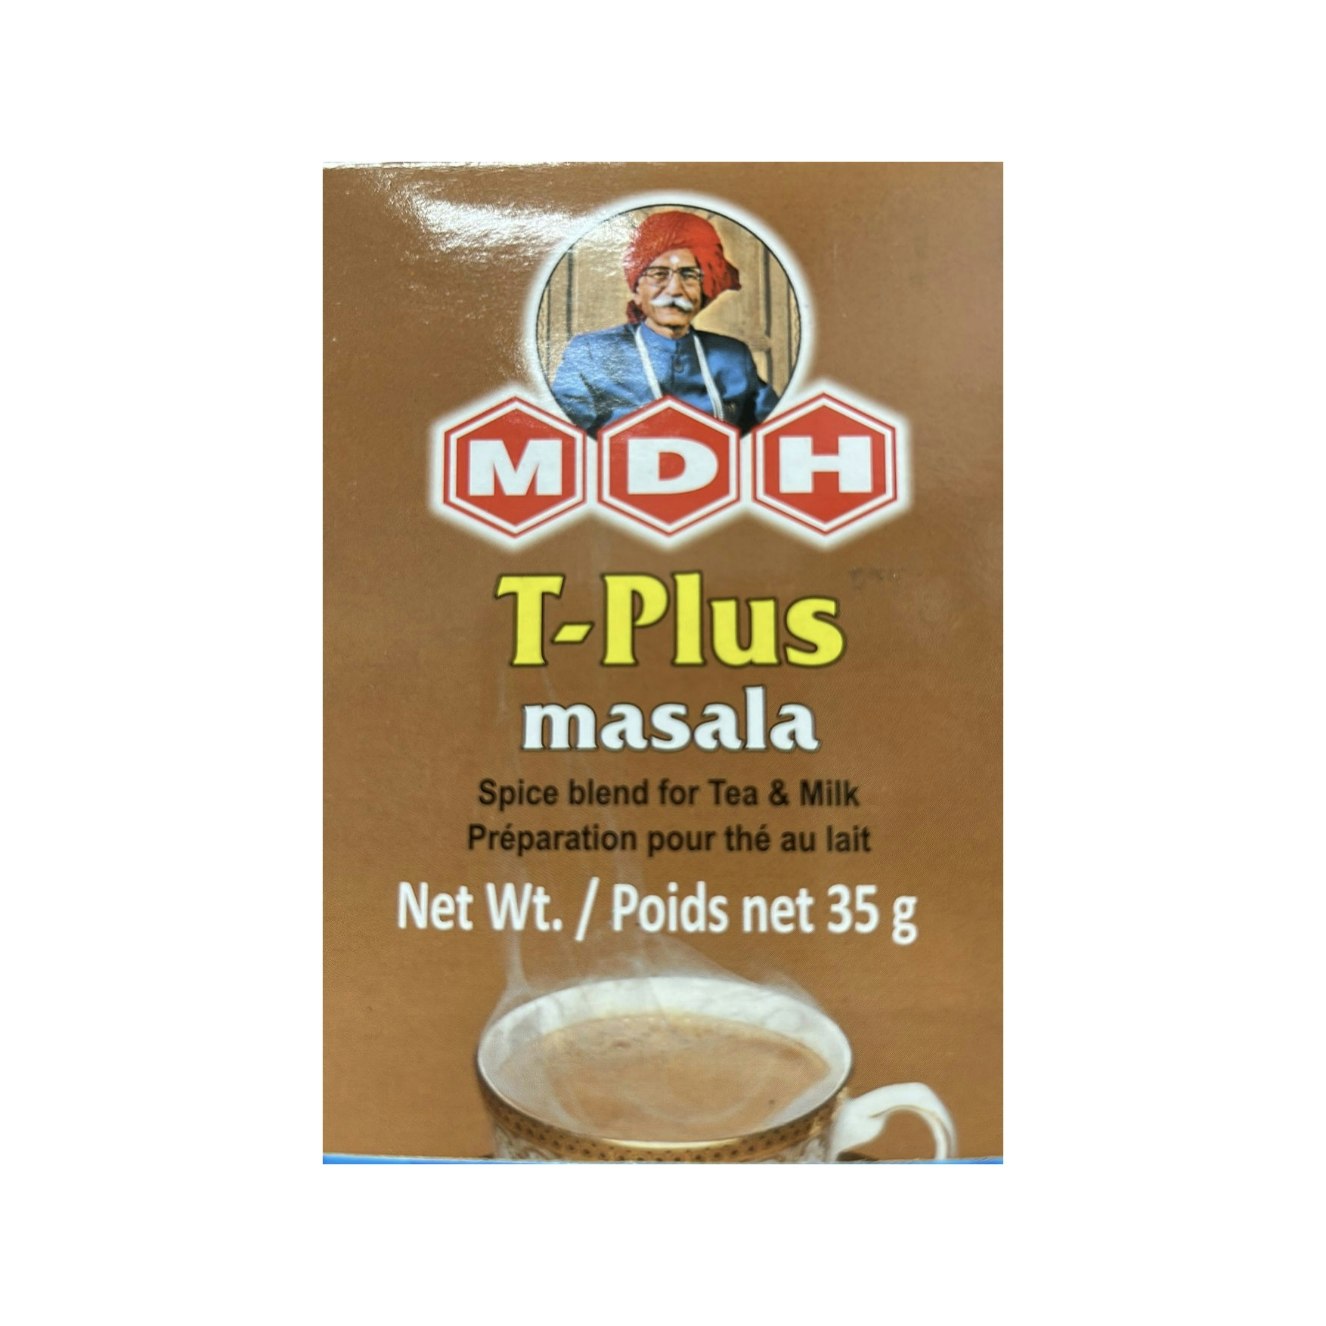 Tea Plus Masala 100g (MDH)